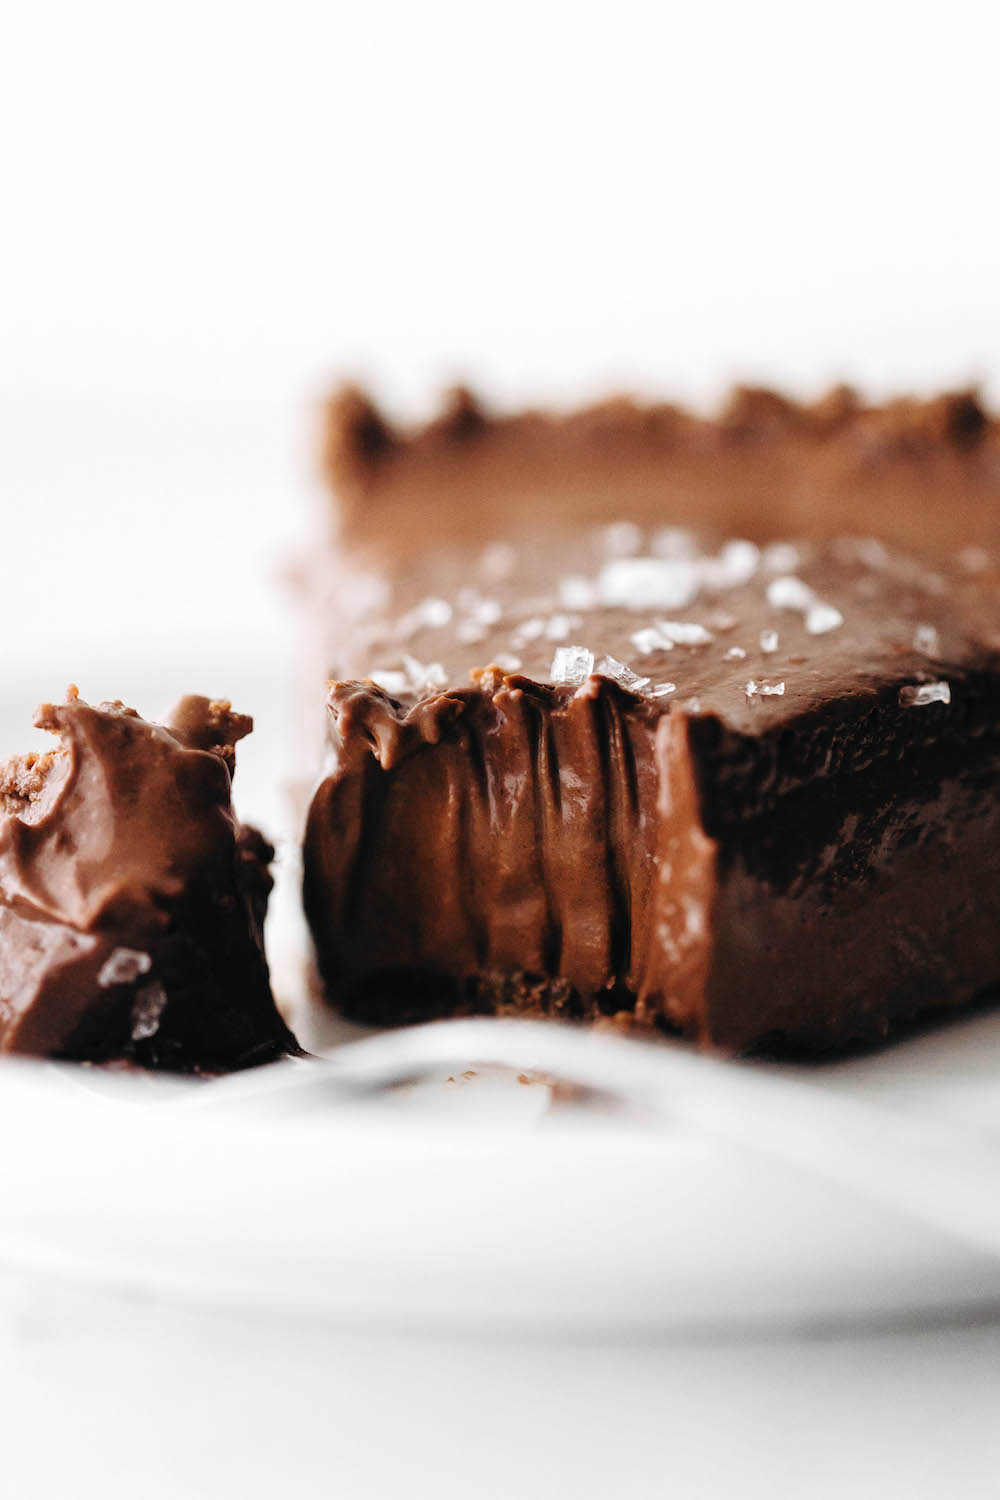 No-Bake Chocolate Cream Pie (vegan + paleo)